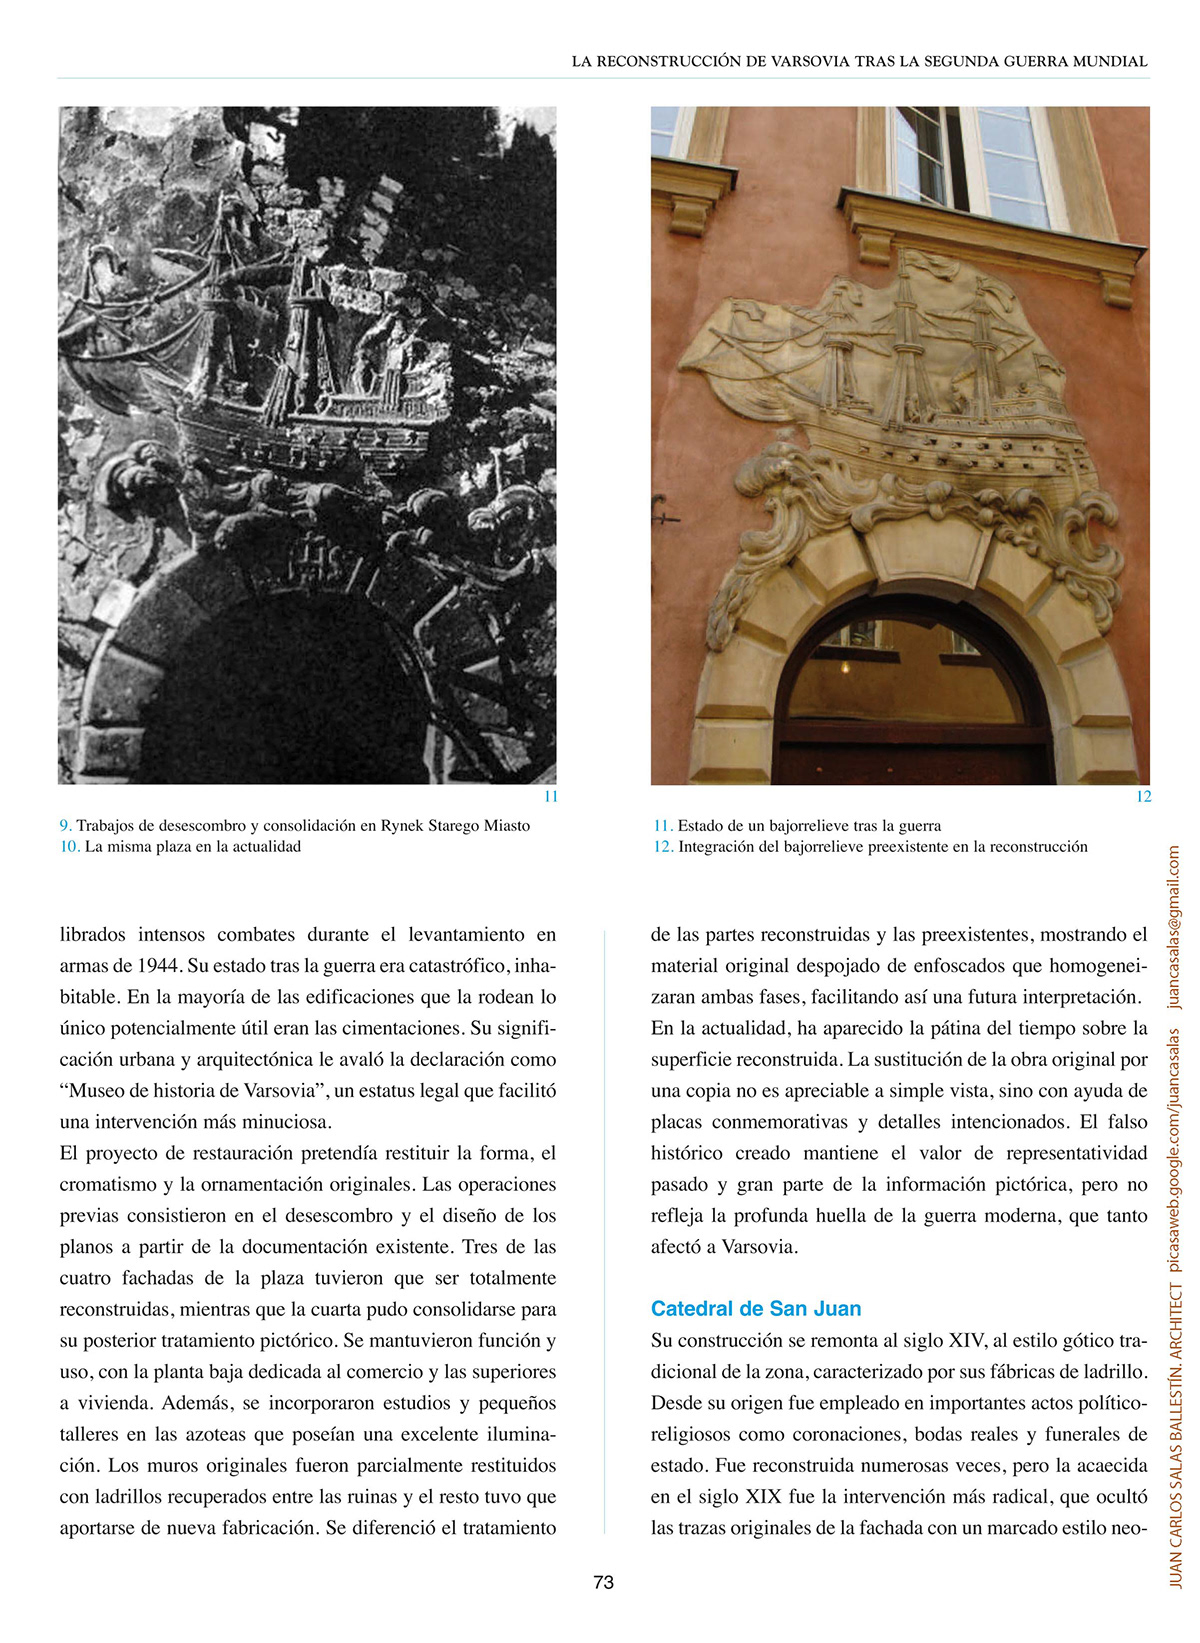 article reconstruction warsaw World war 2 restoration renovation